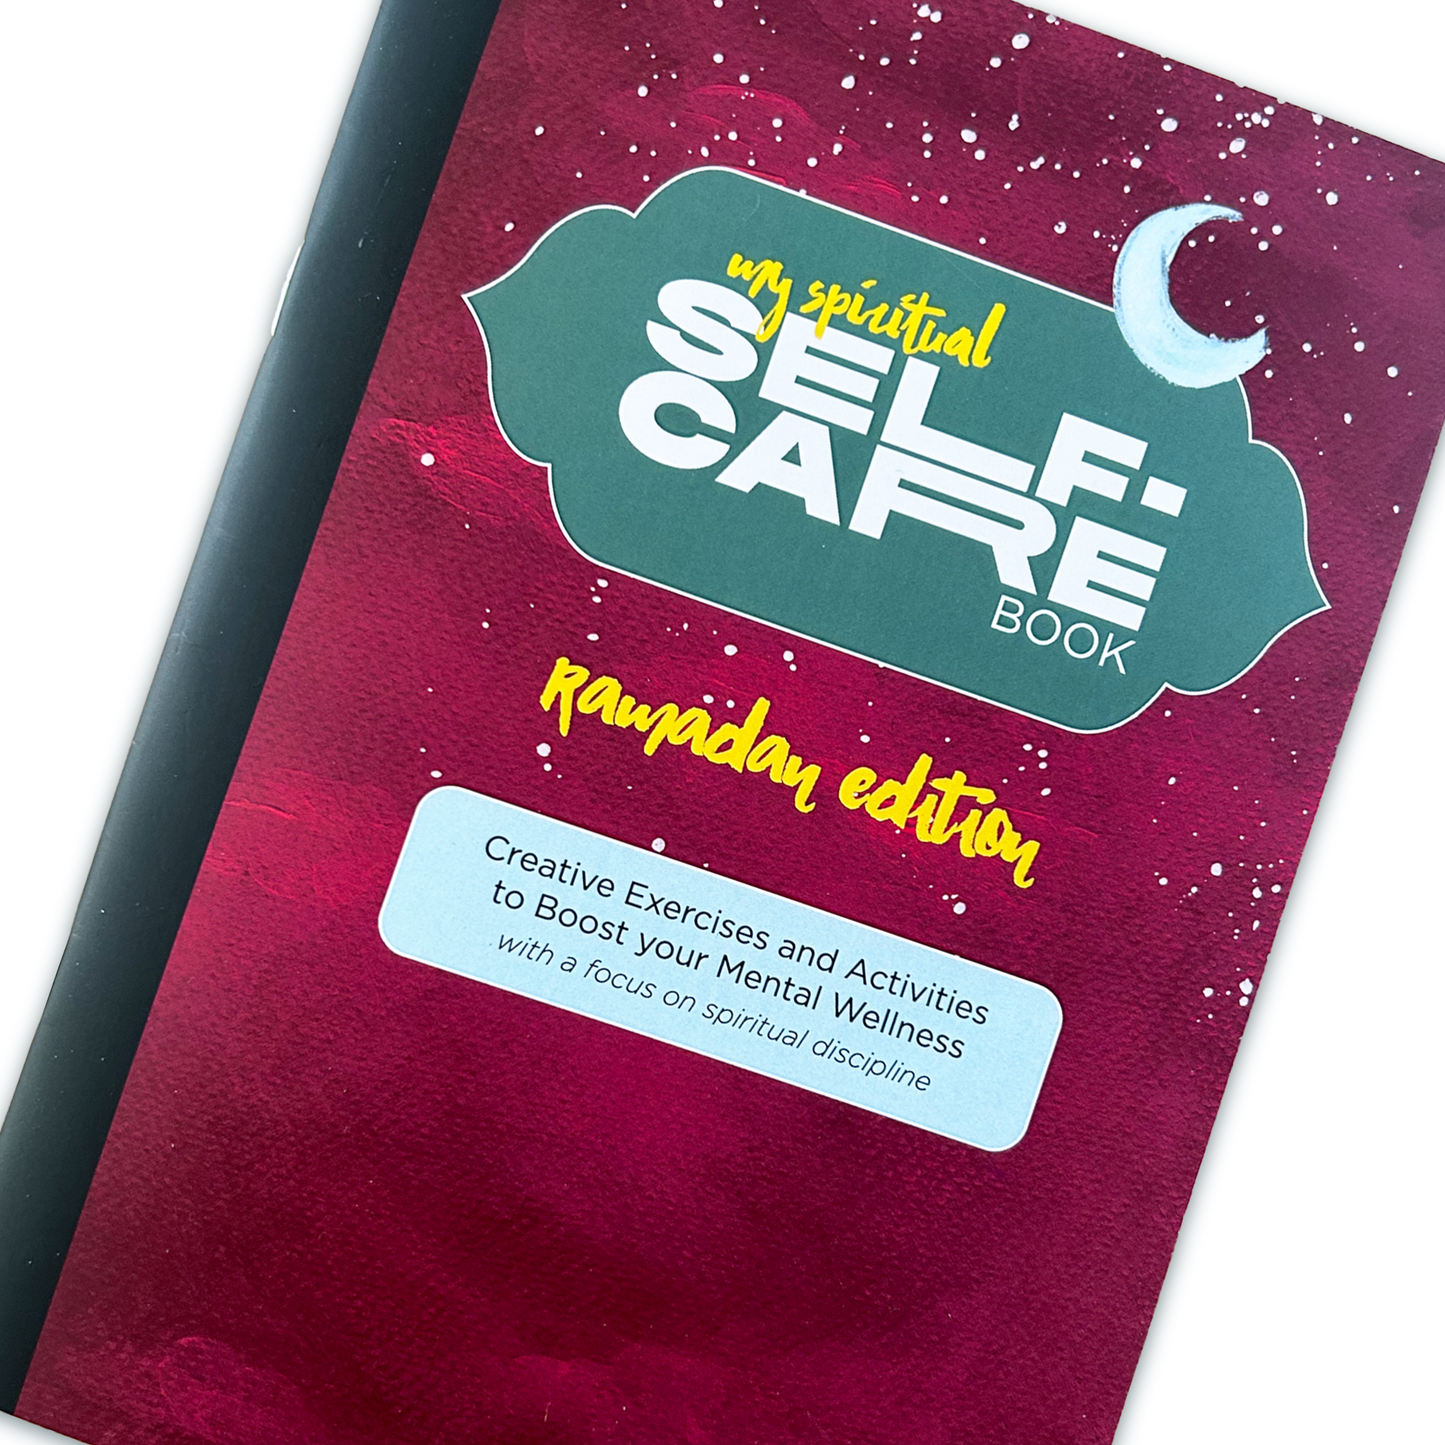 My Spiritual Self-Care Book Ramadan Edition